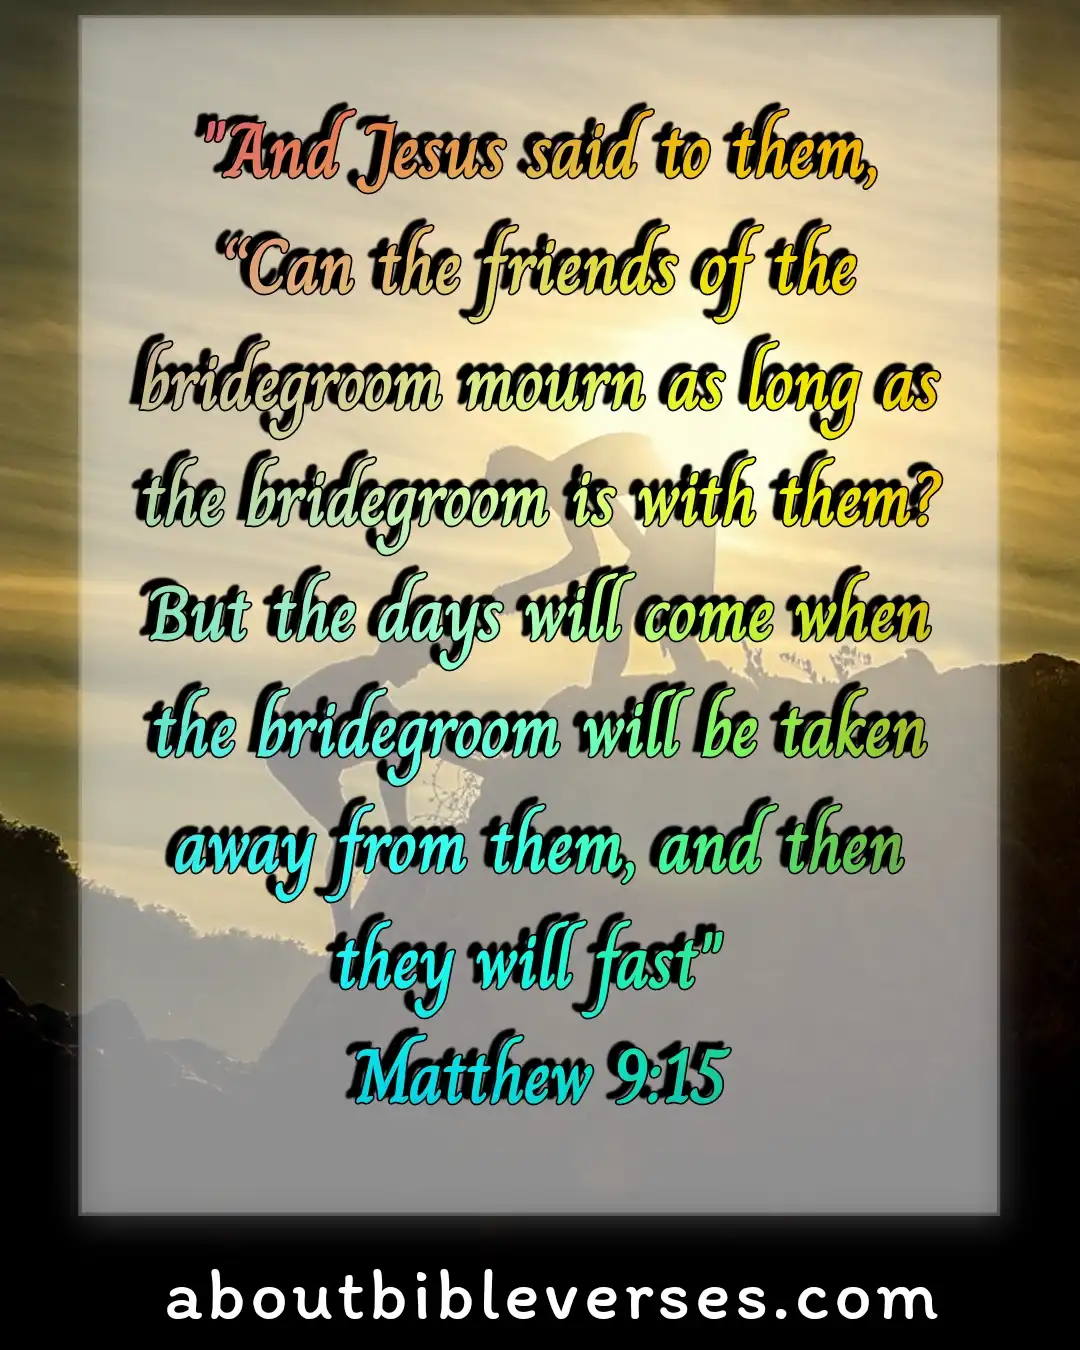 Bible Verses about Fasting (Matthew 9:15)